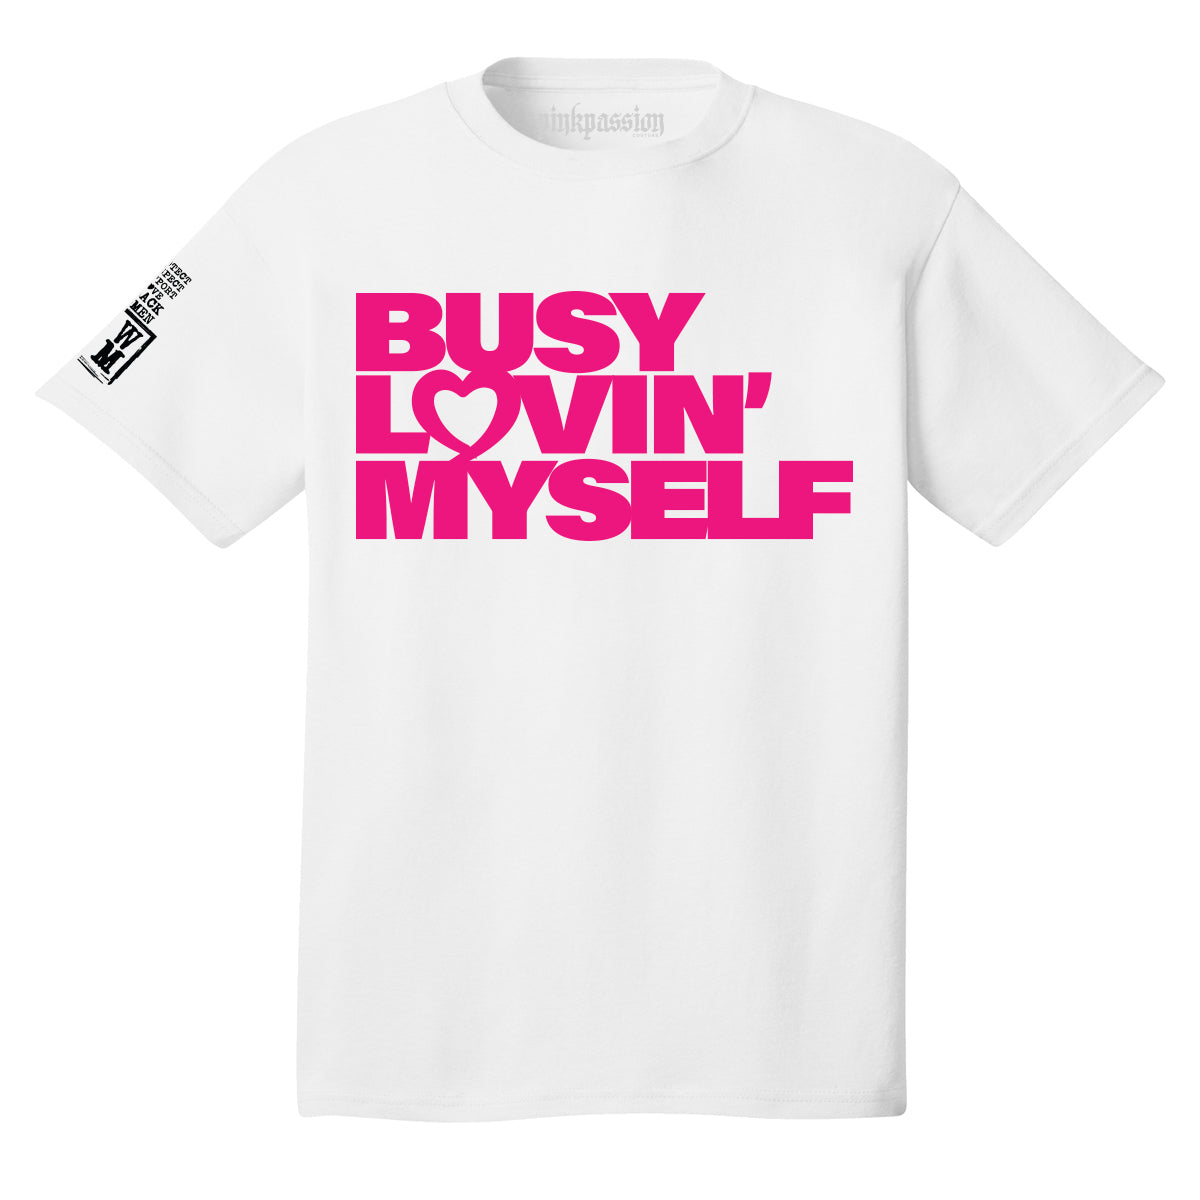 Busy Lovin' Myself T-shirt (Unisex)